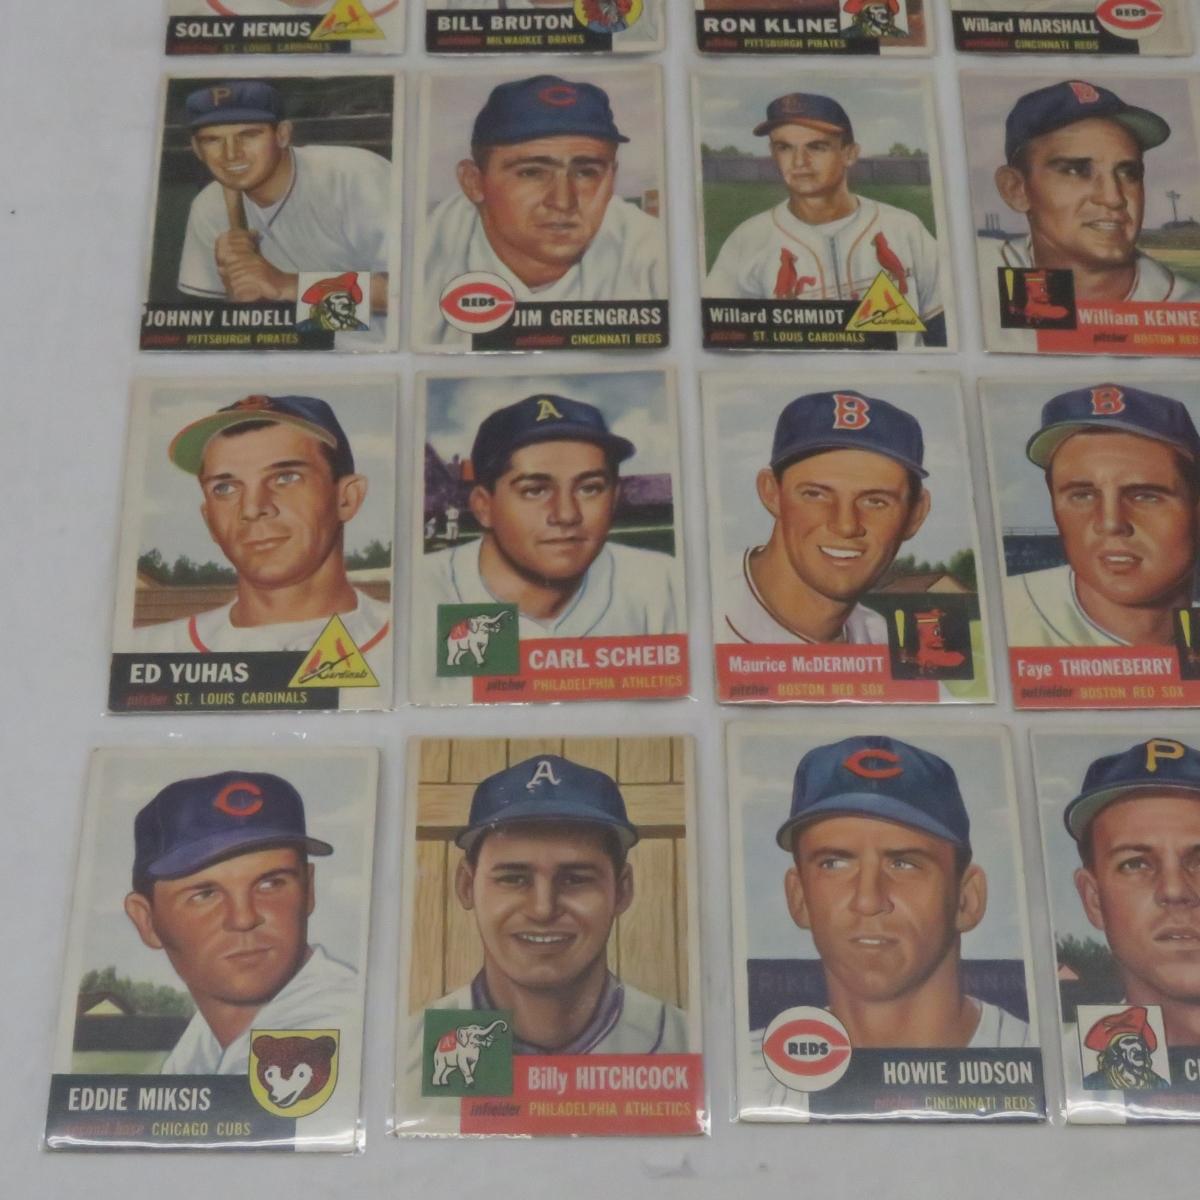 30 Nice 1953 Topps Baseball Cards- Hi Numbers